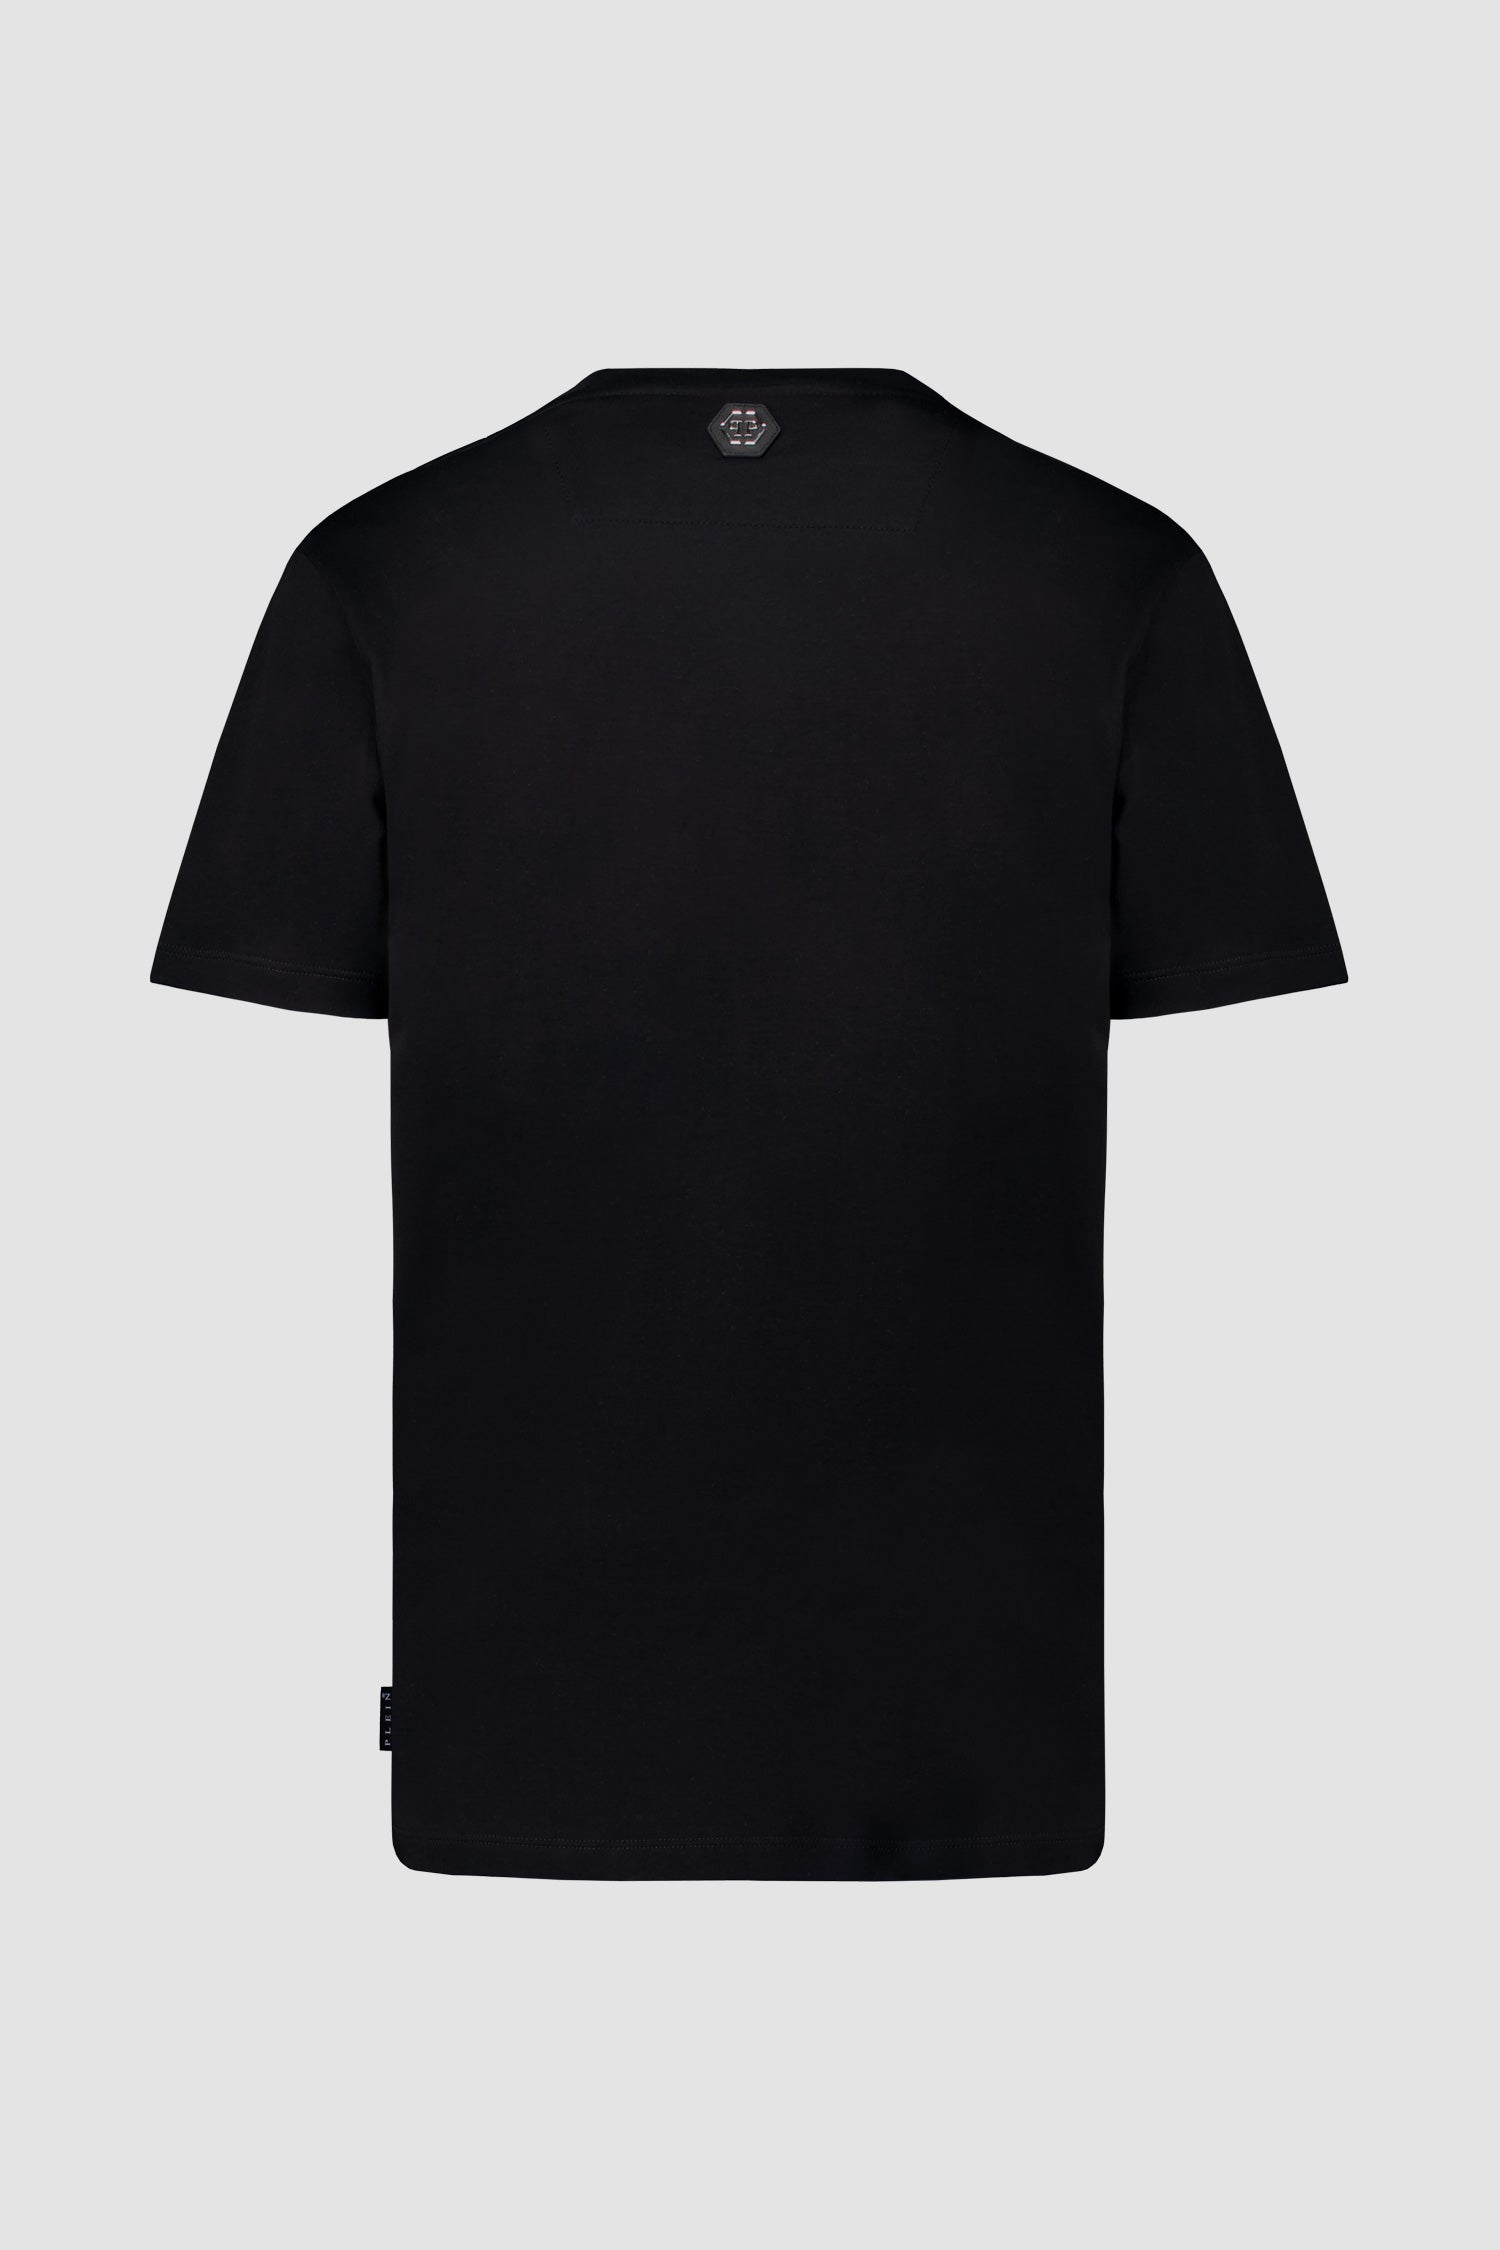 Philipp Plein Black Round Neck SS PP Glass T-Shirt